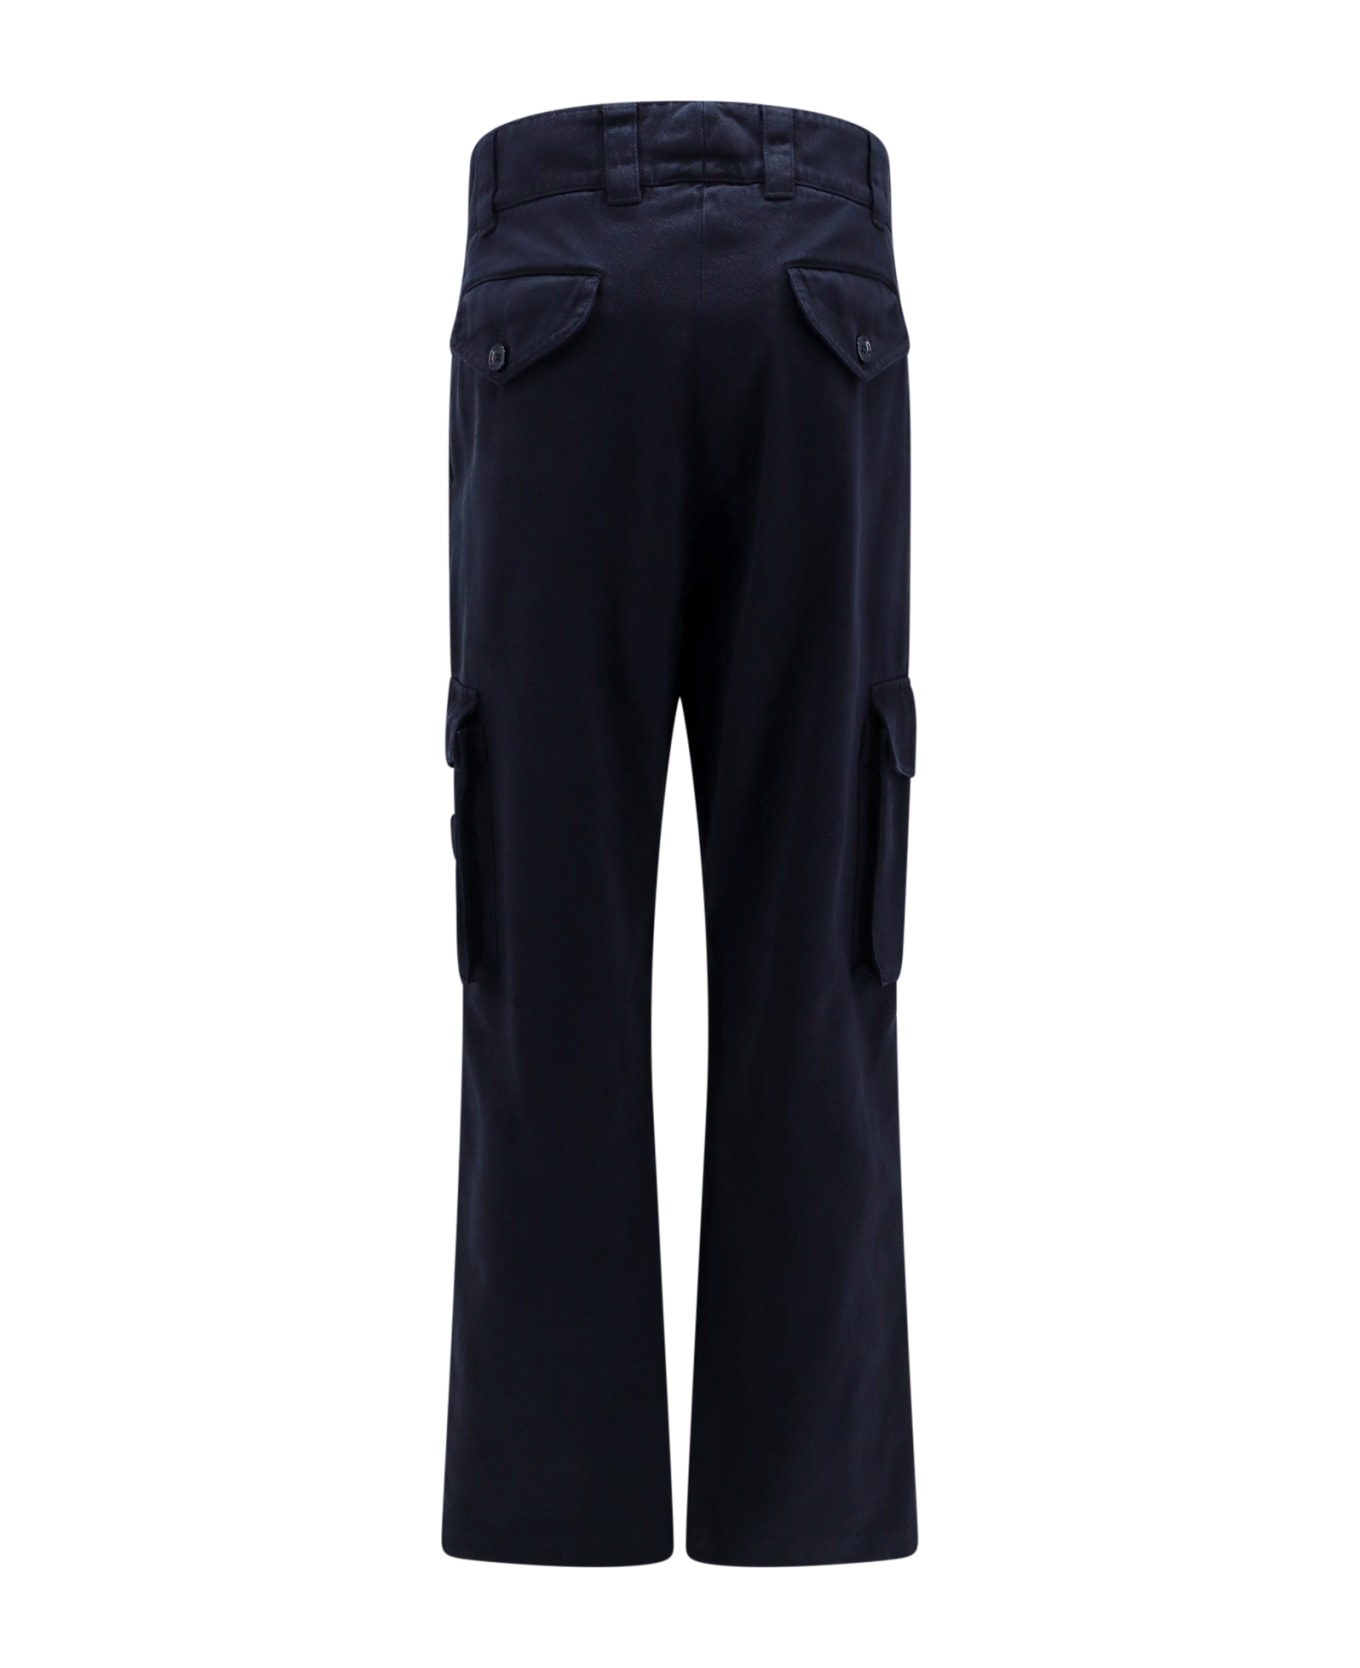 Dolce & Gabbana Trouser - BLU SCURISSIMO 1 (Blue)